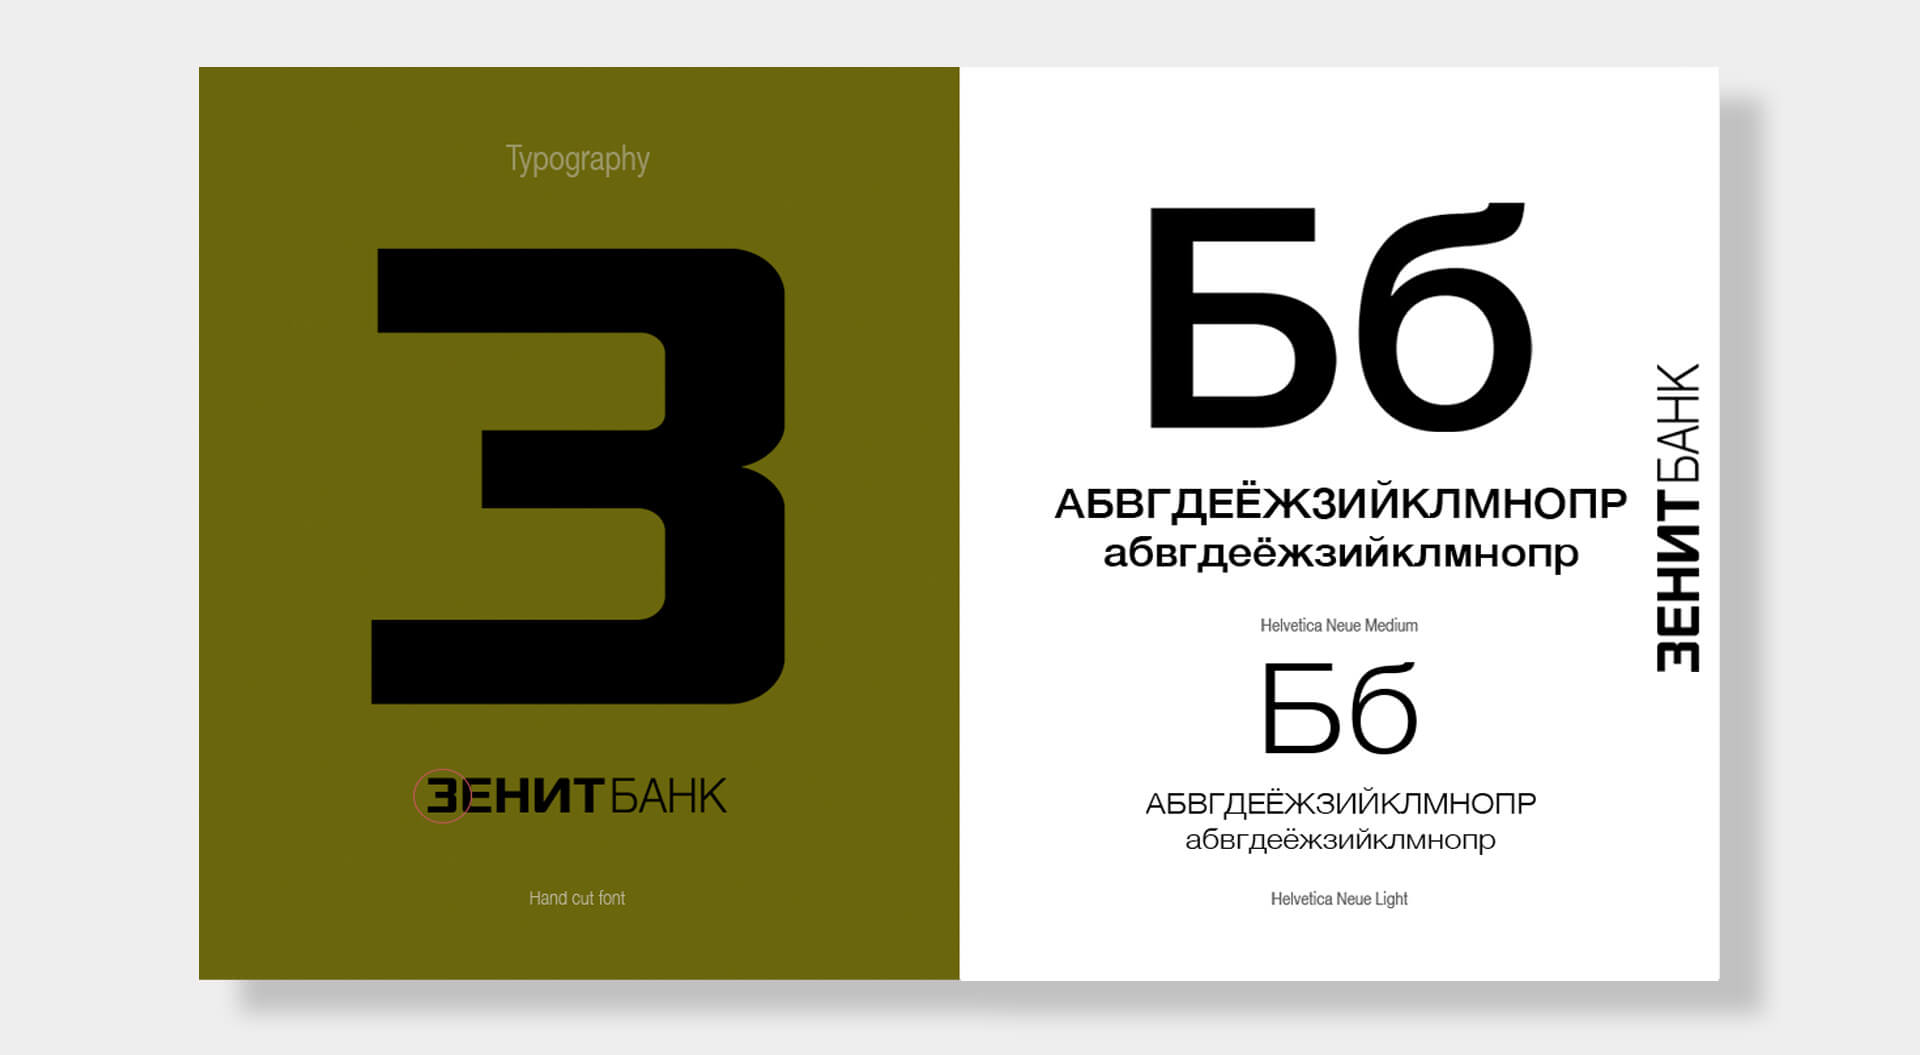 Zenit Bank Russia, Retail Branding, Brand Identity, Graphic Communications - CampbellRigg Agency